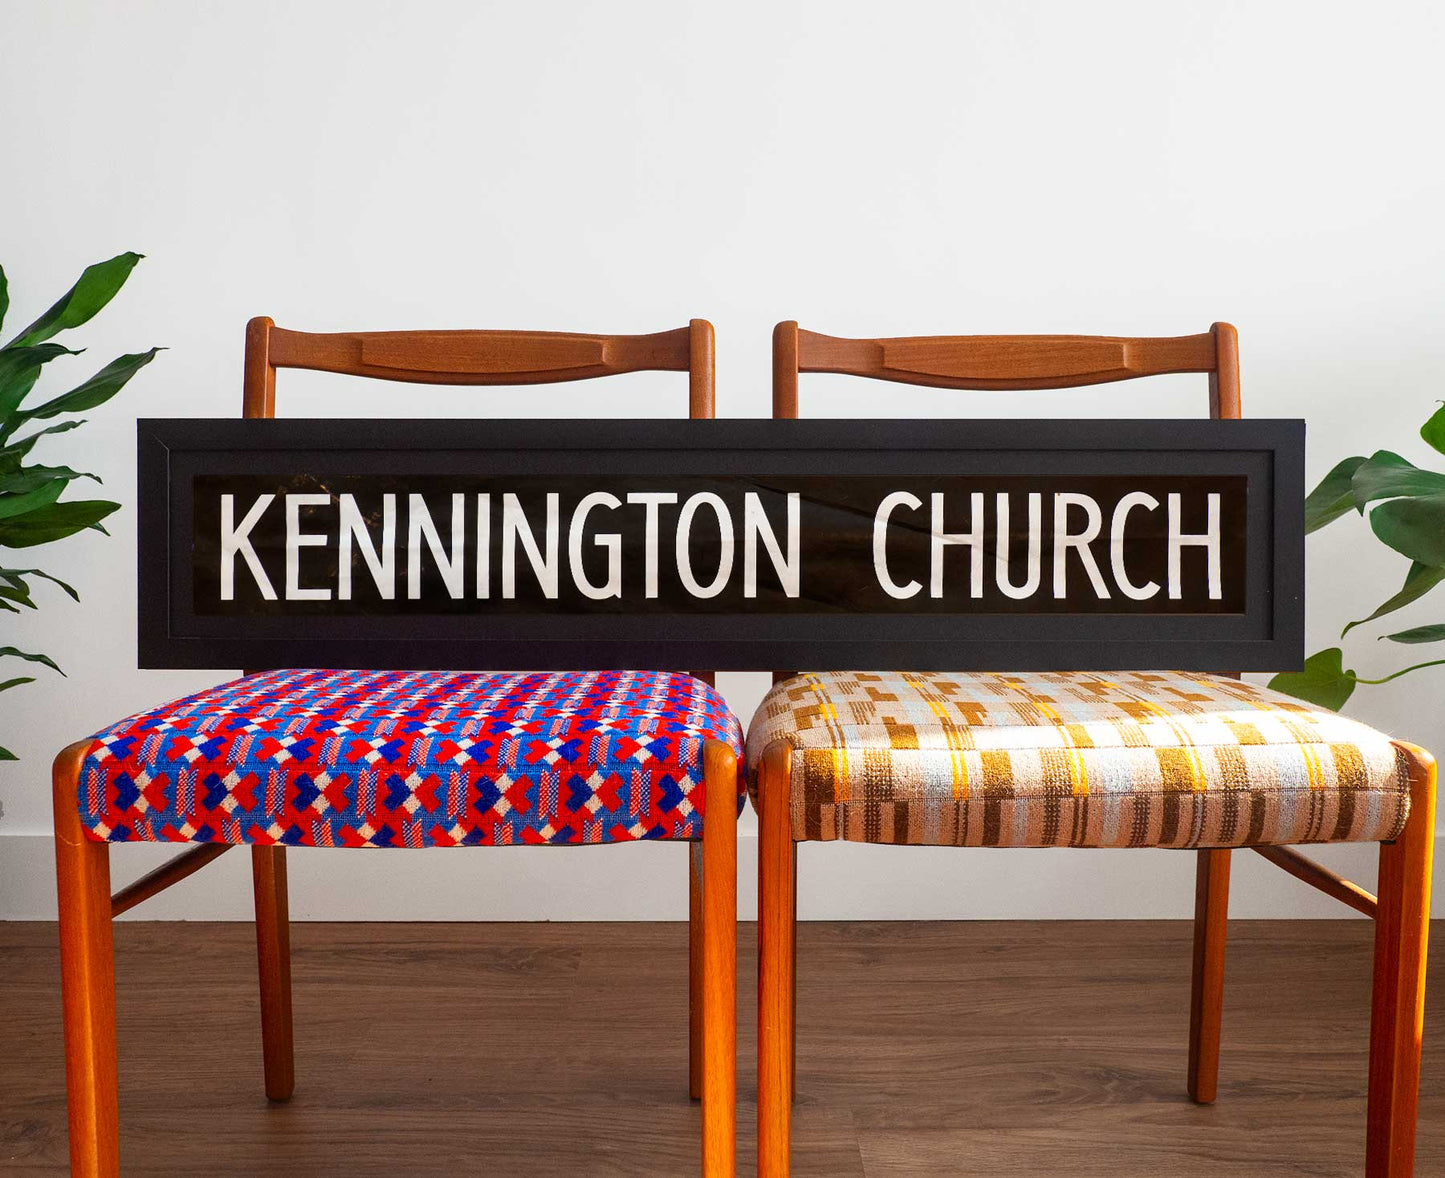 Kennington Church Framed London Bus Blind